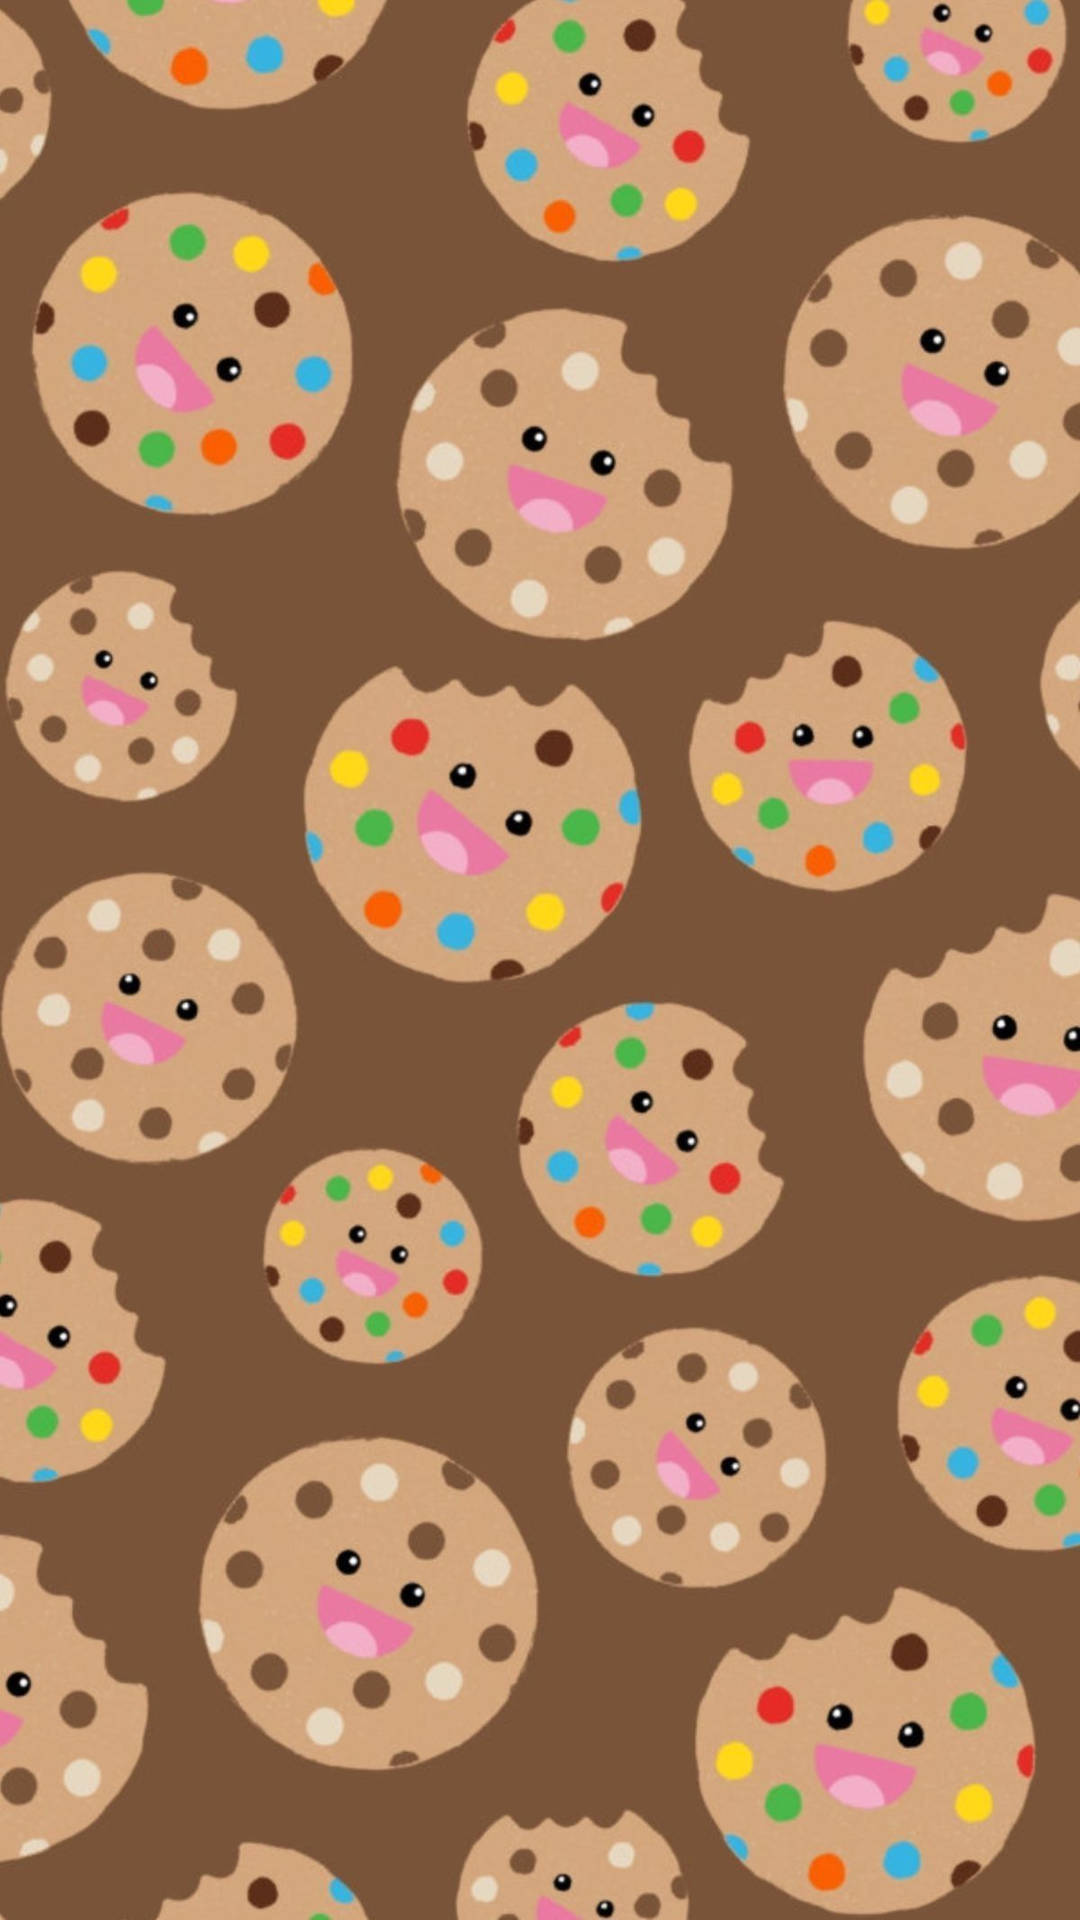 Cookie Wallpaper Images - Free Download on Freepik